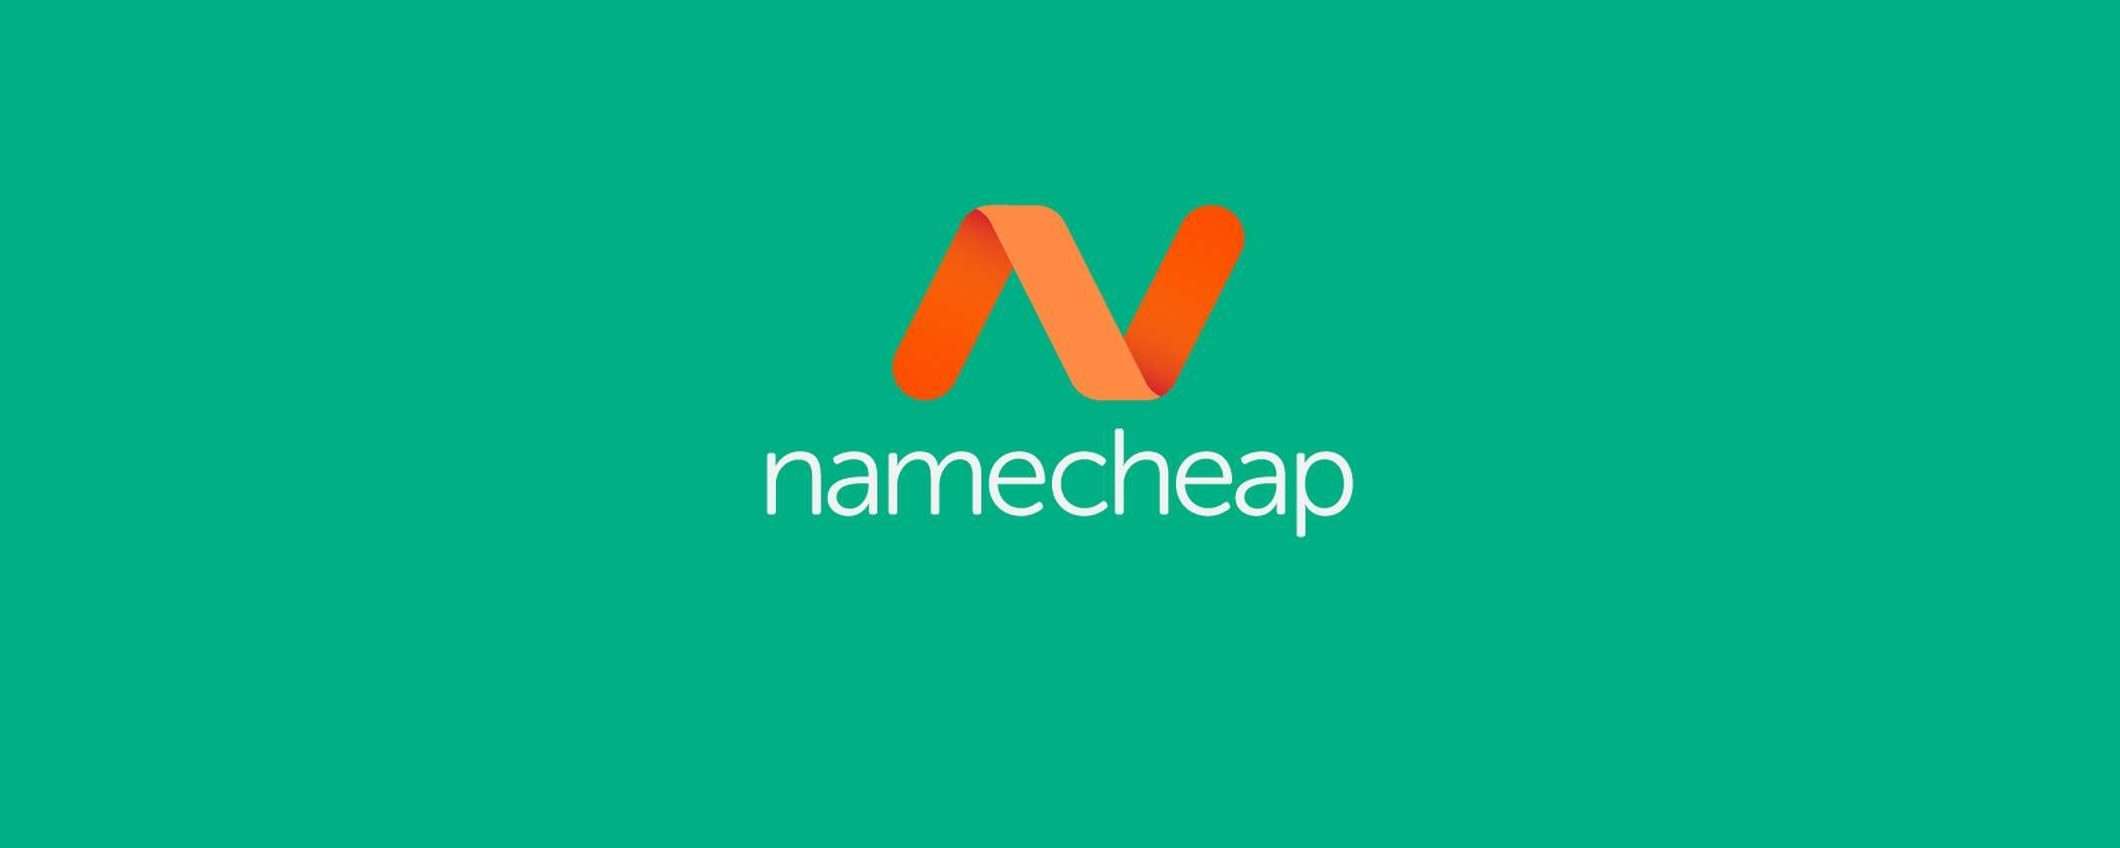 Namecheap: pioggia di sconti su hosting e domini